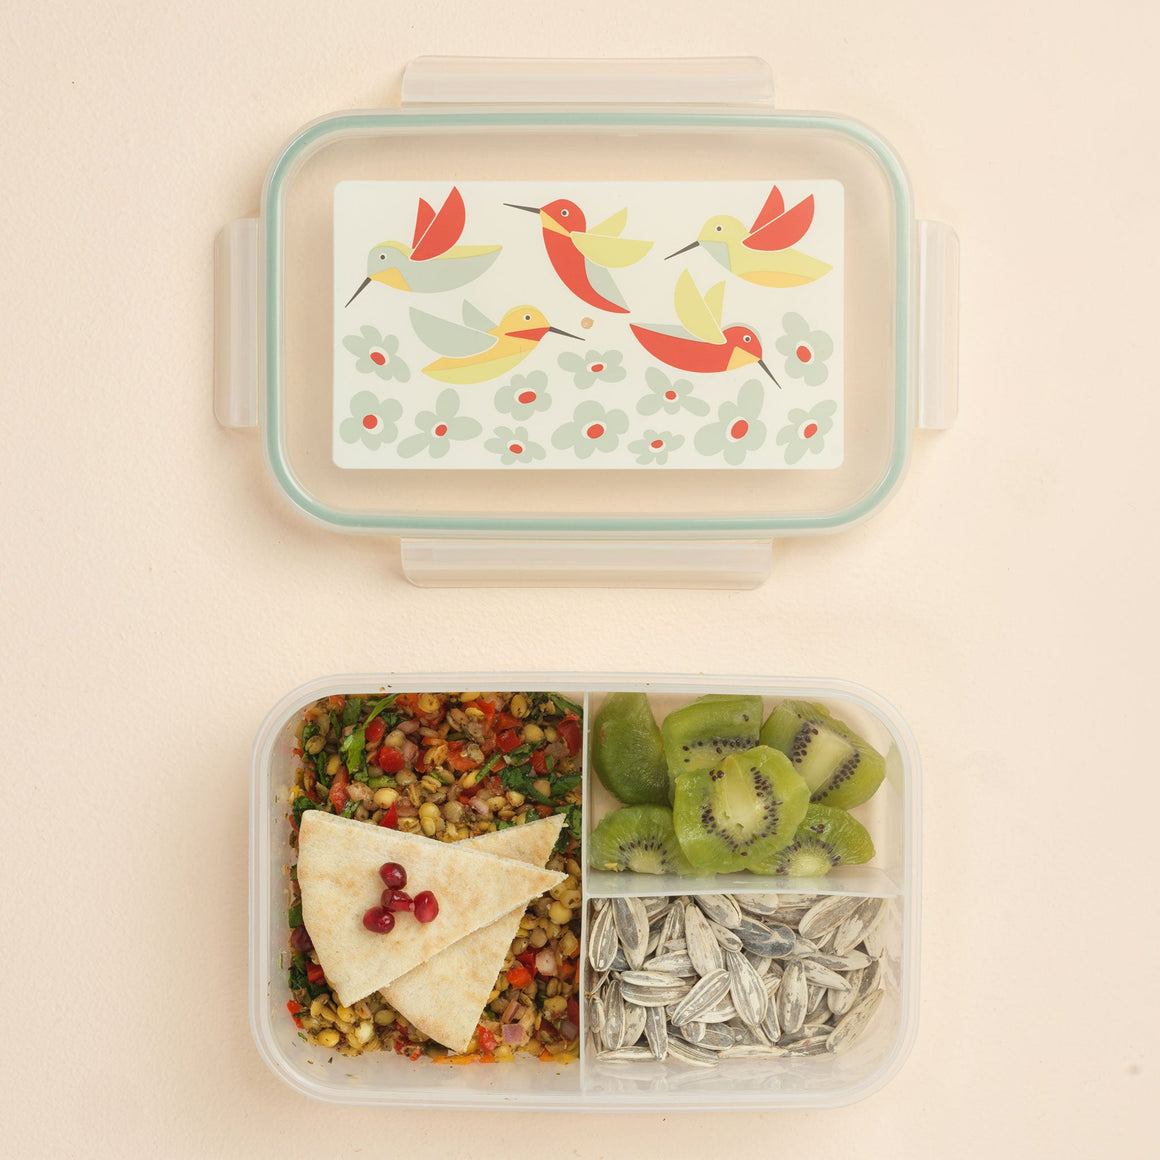 Hummingbird - Good Lunch Box